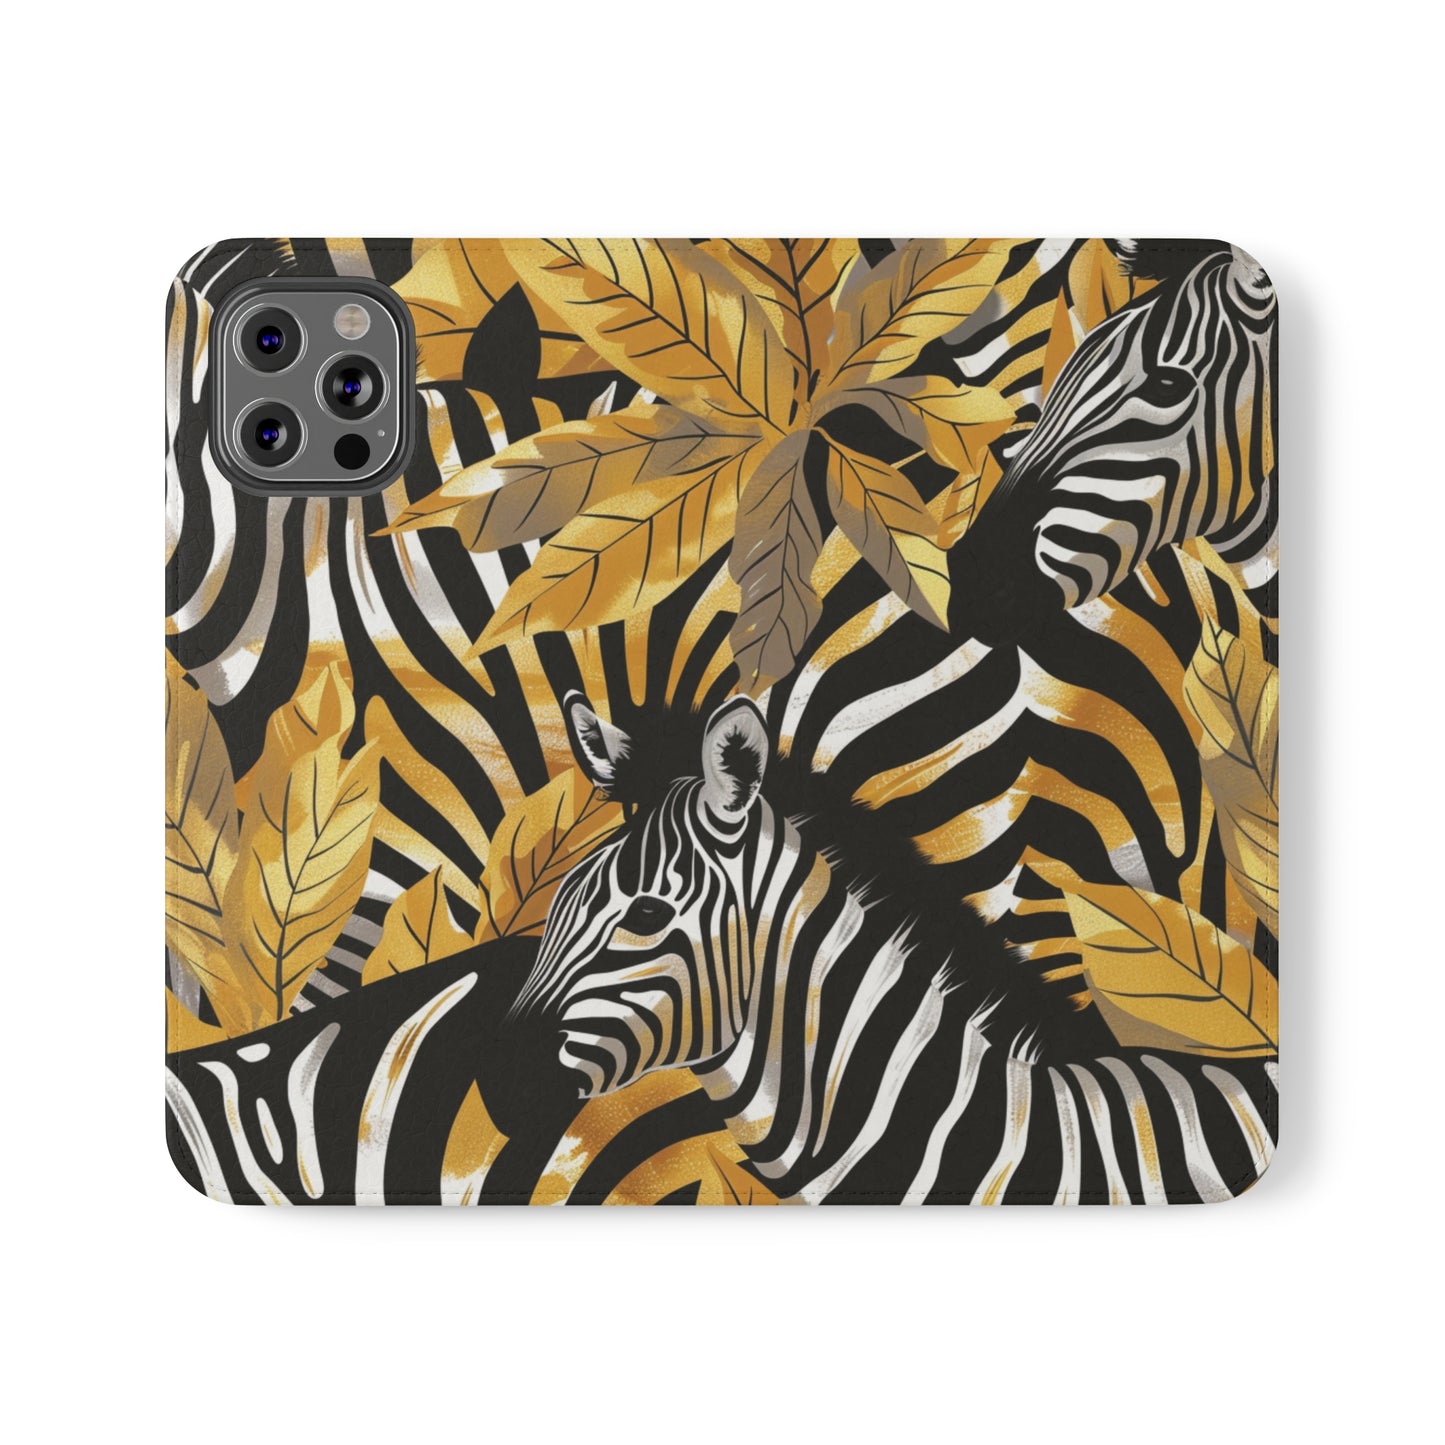 Protective zebra stripe case for iPhone 11 Pro